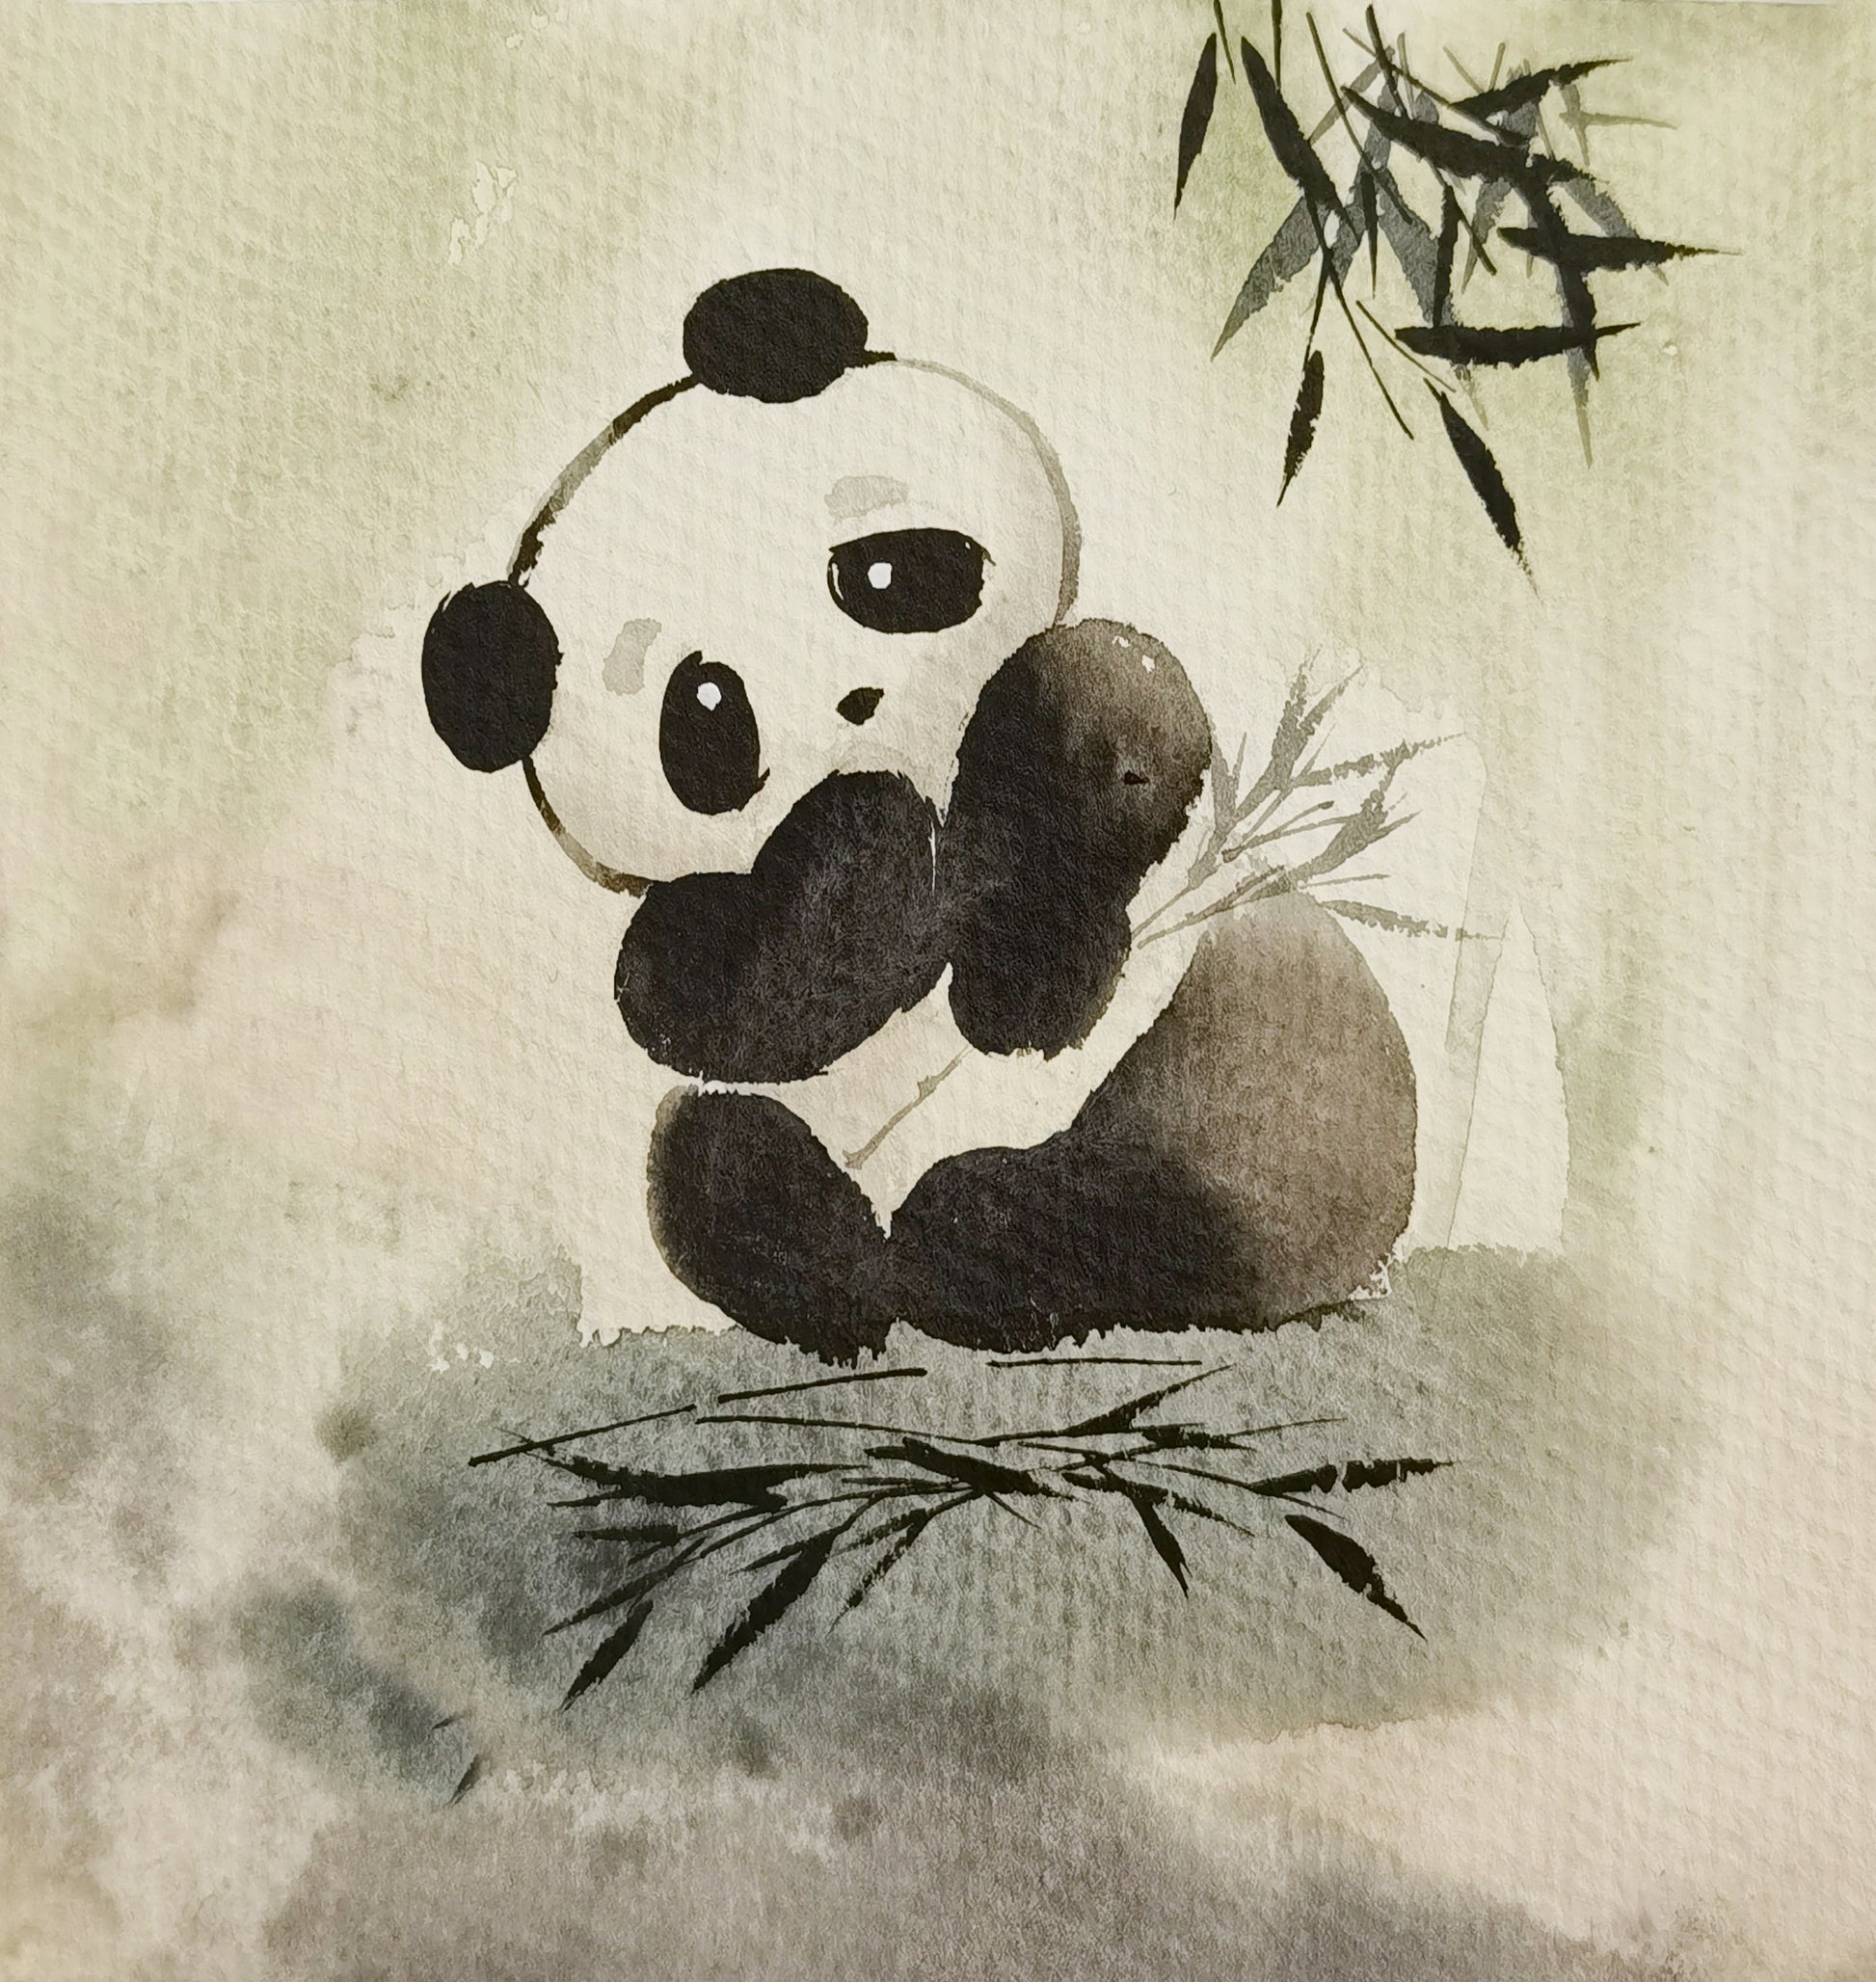 Panda Vividland Handmade Art Printing Bamboo Playful Cute with Wood Frame